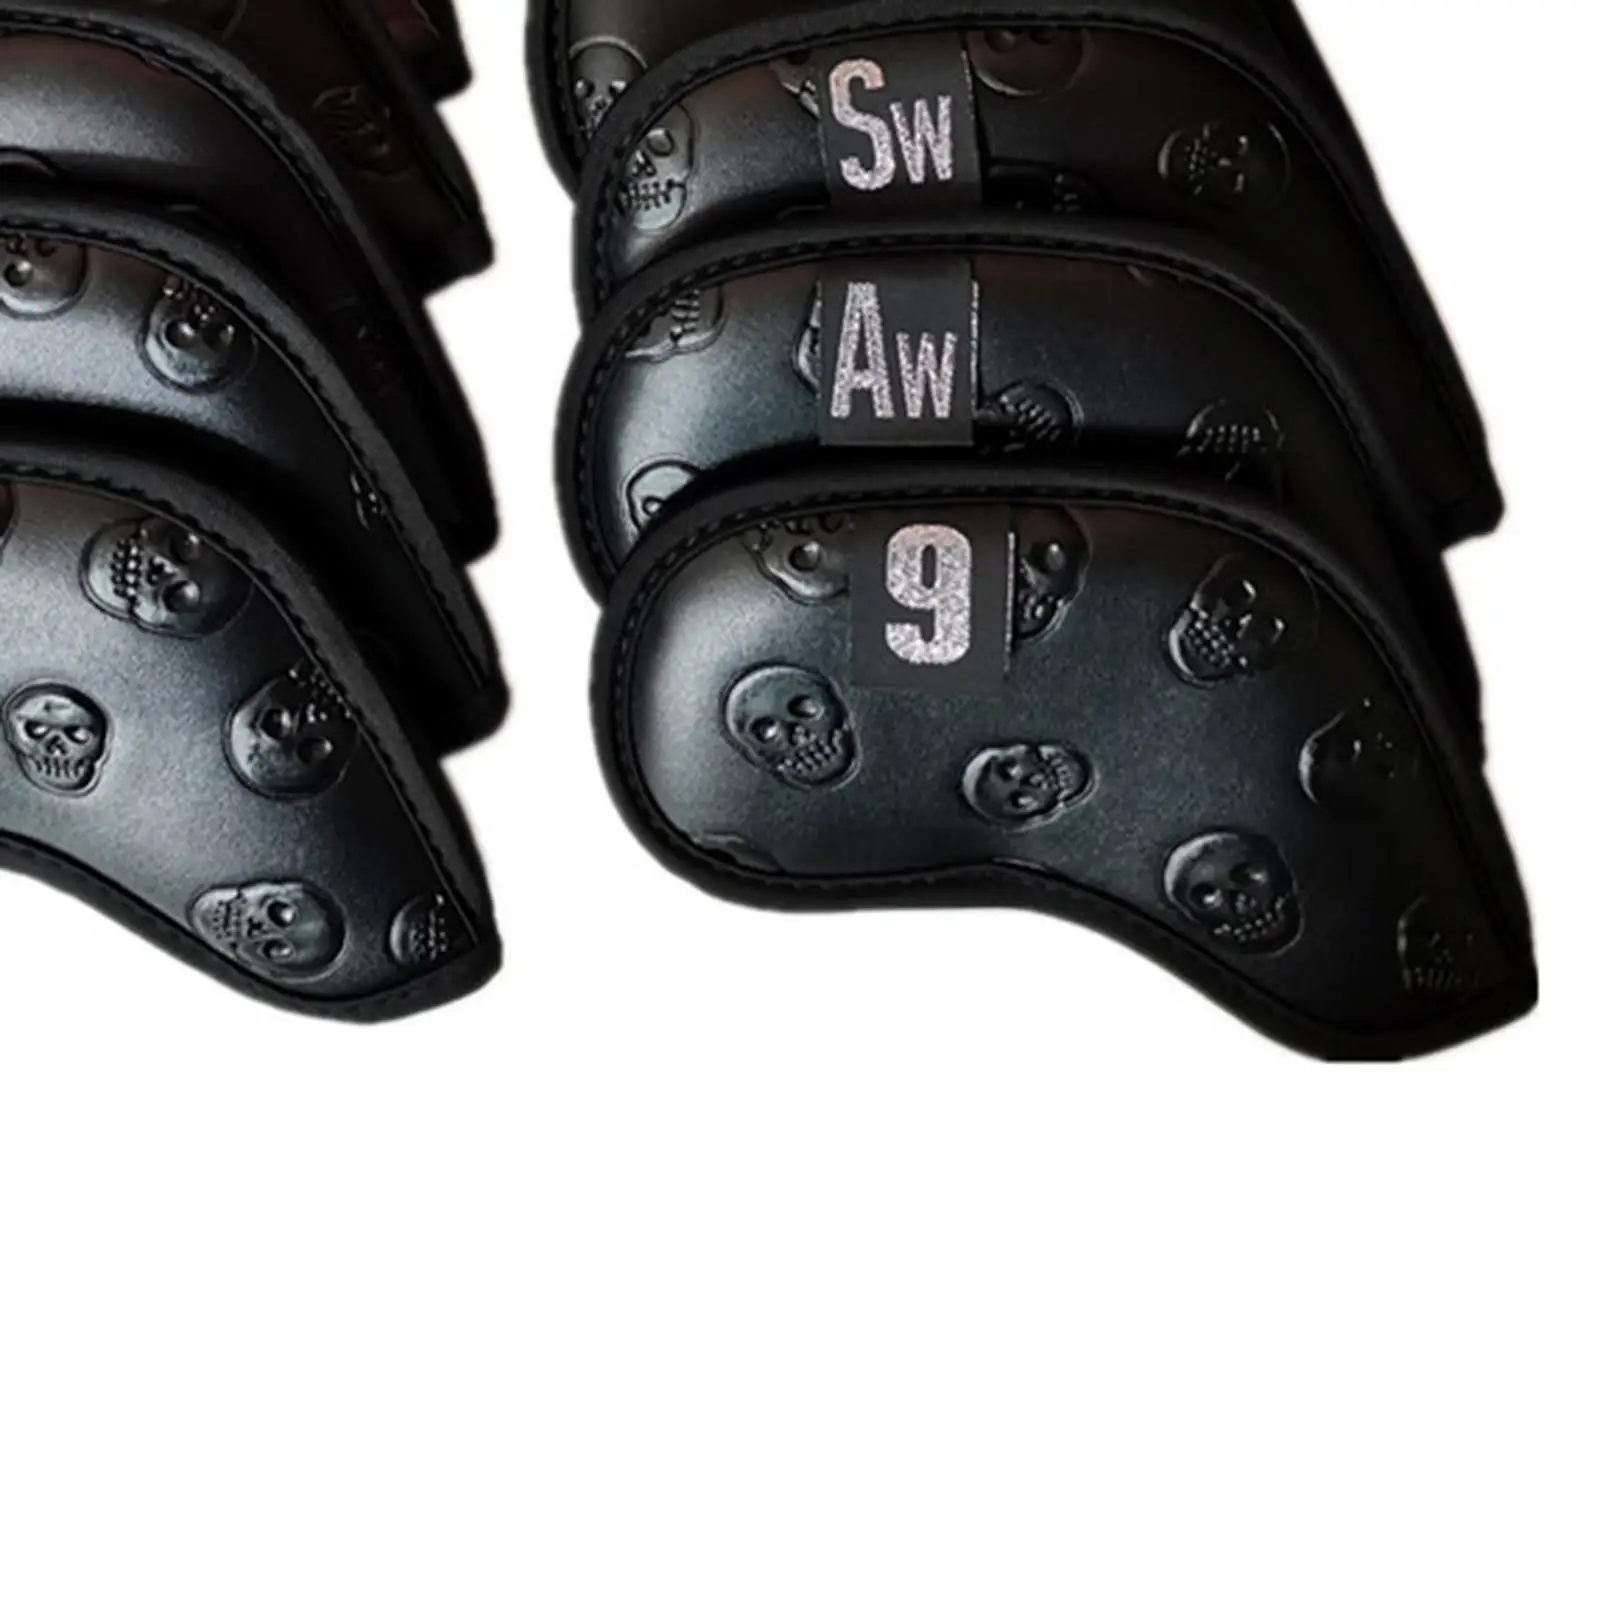 9x Skull Golf Iron Headcover Head Covers Anti-Scratch Irons Guard